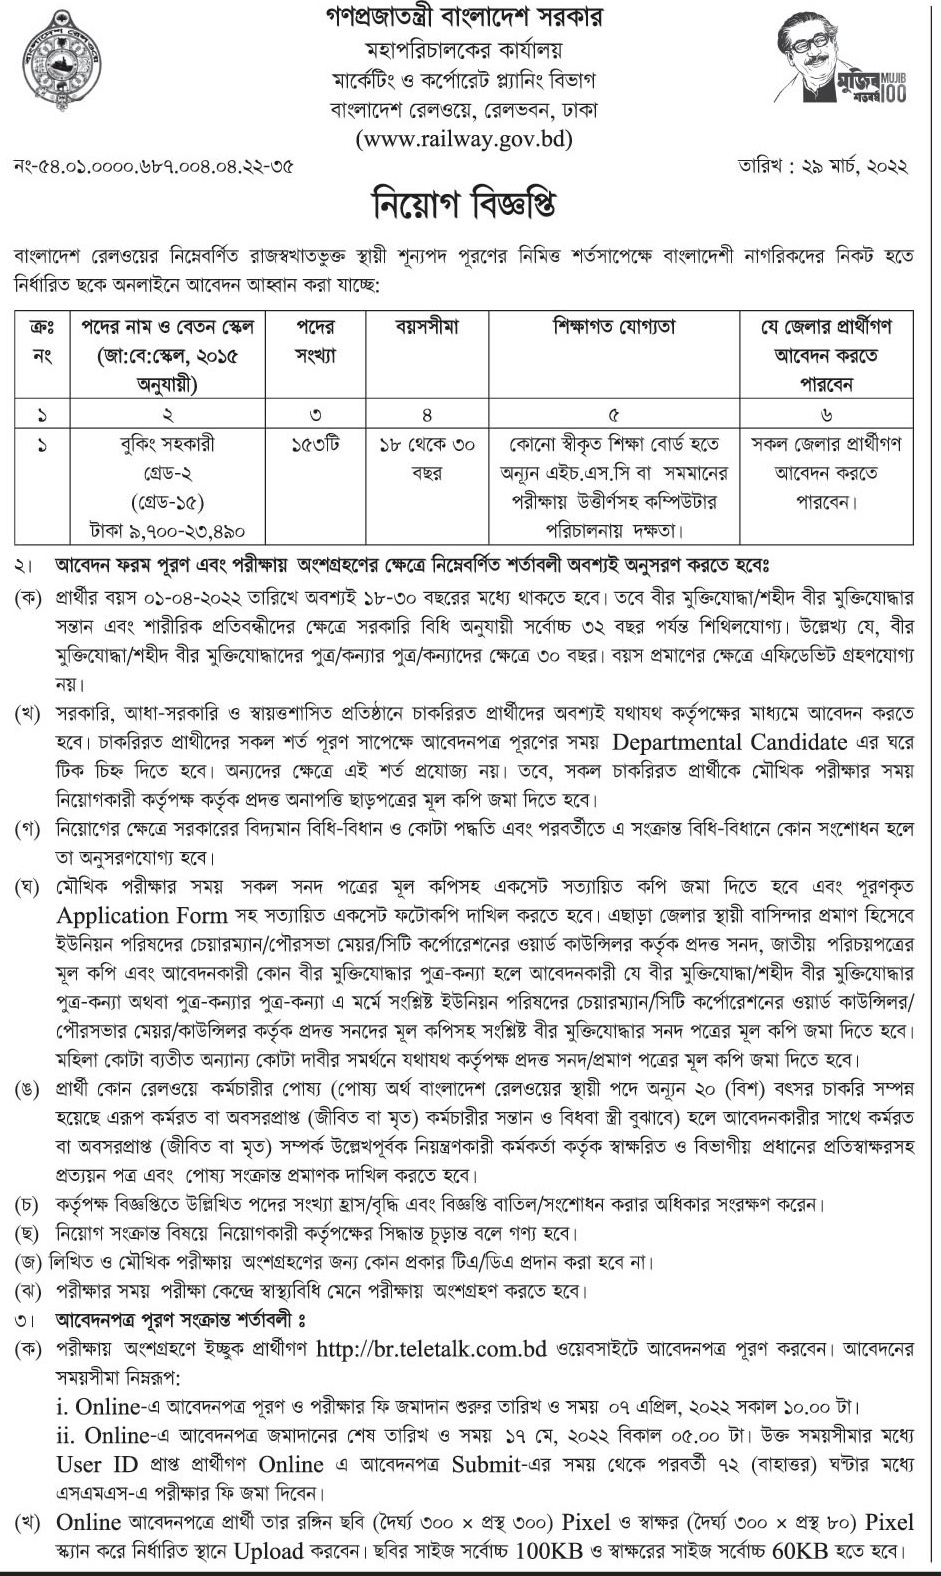 Bangladesh Railway Job Circular 2022 - www.railway.gov.bd